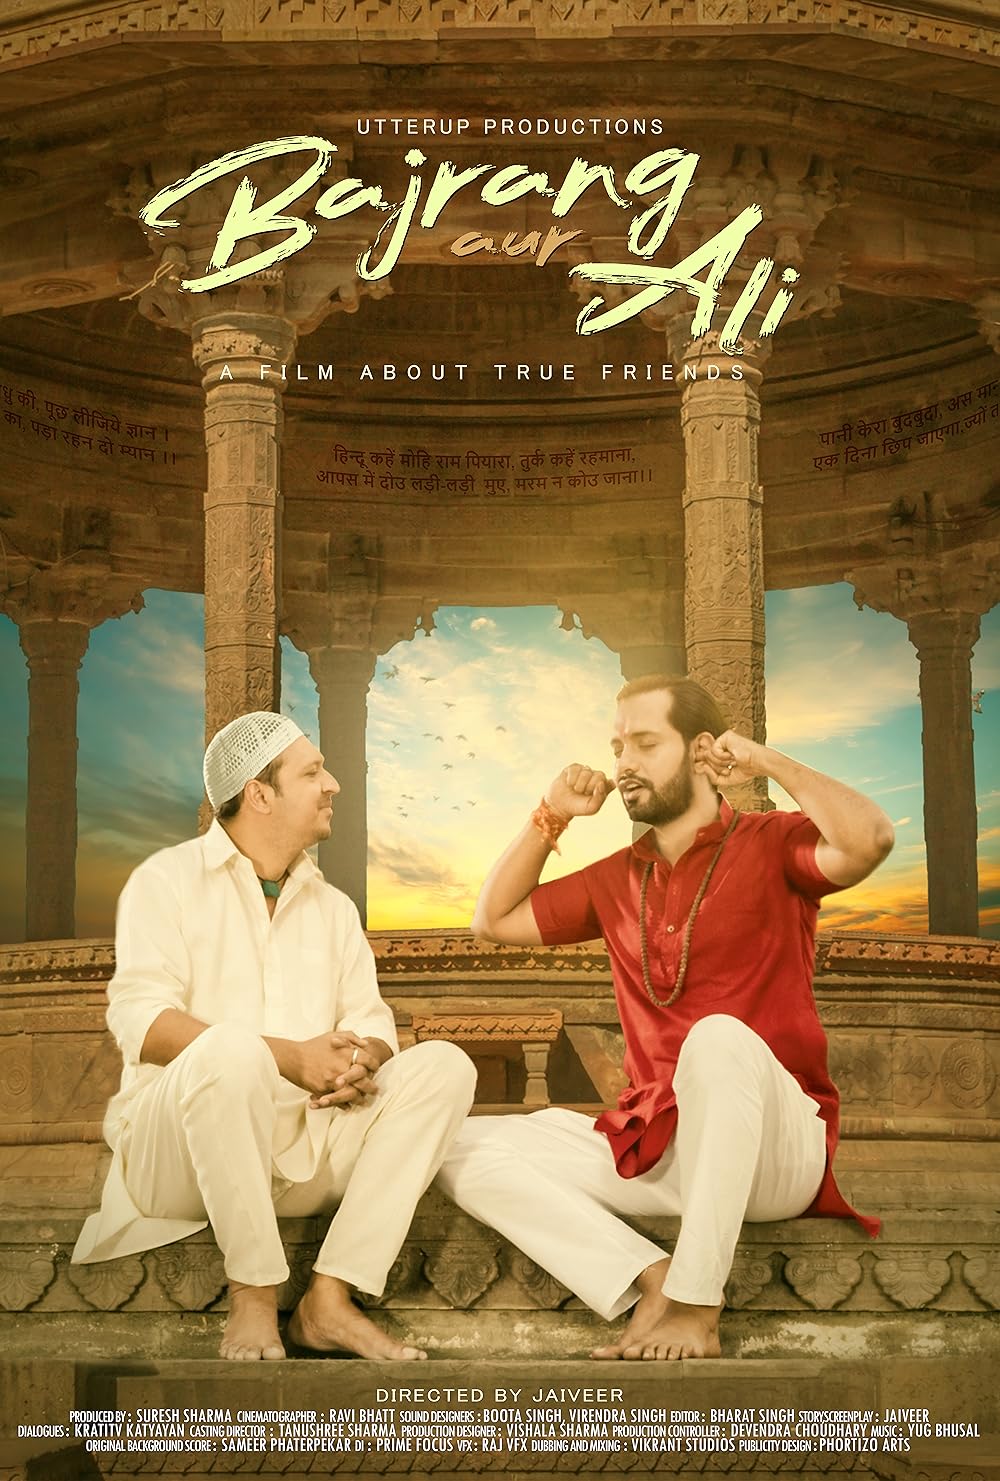 sanak movie review in hindi